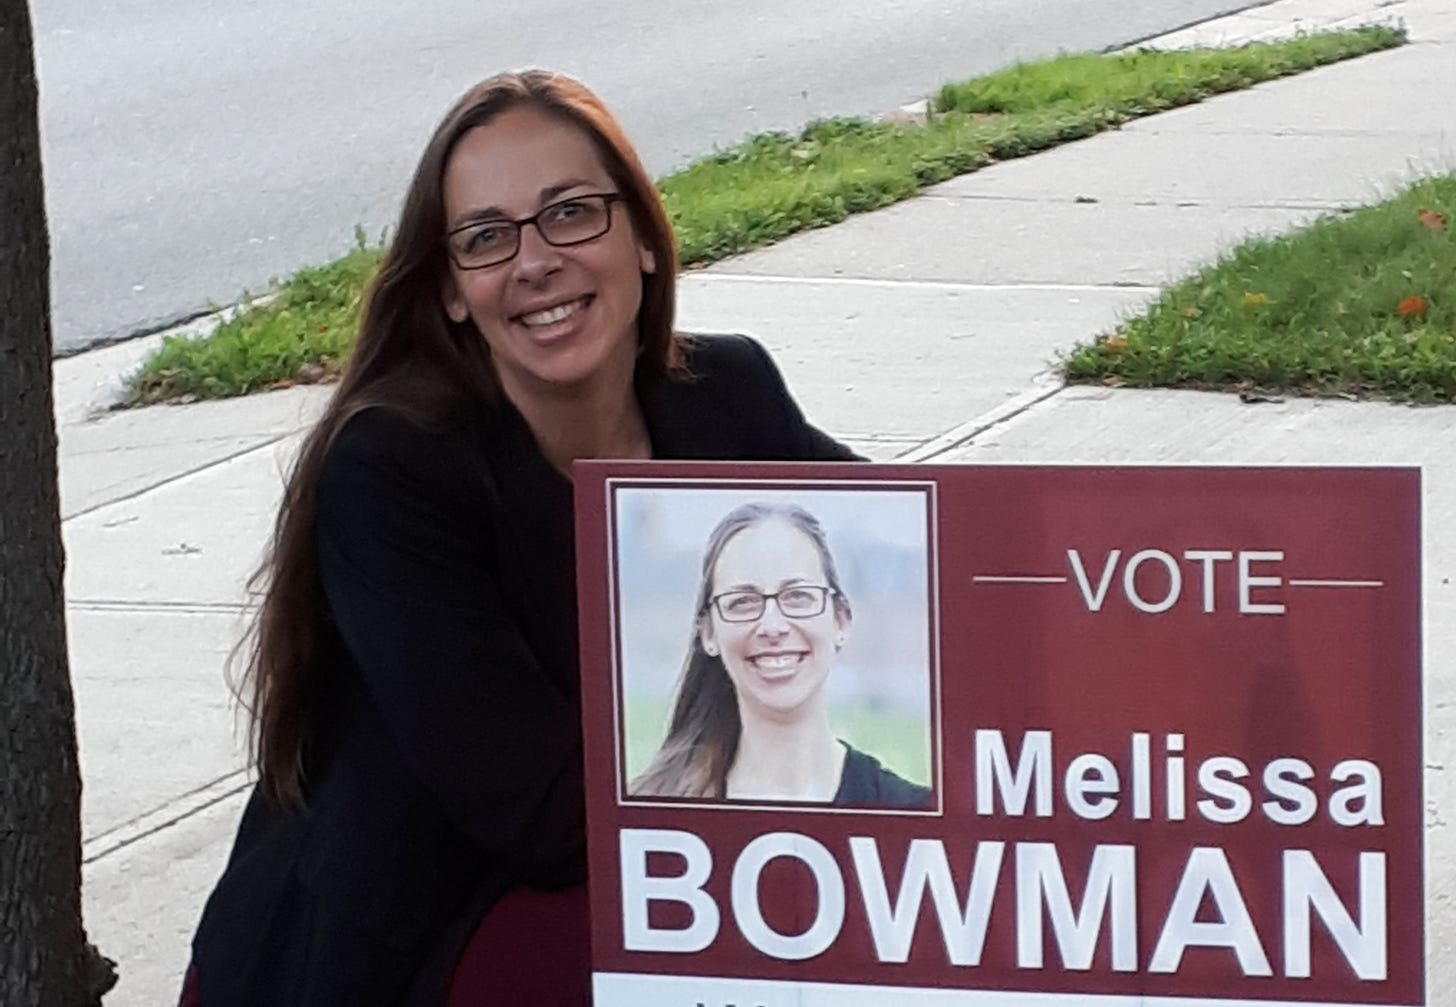 Woman (Melissa Bowman) kneeling down beside an "Vote Melissa Bowman' election sign.